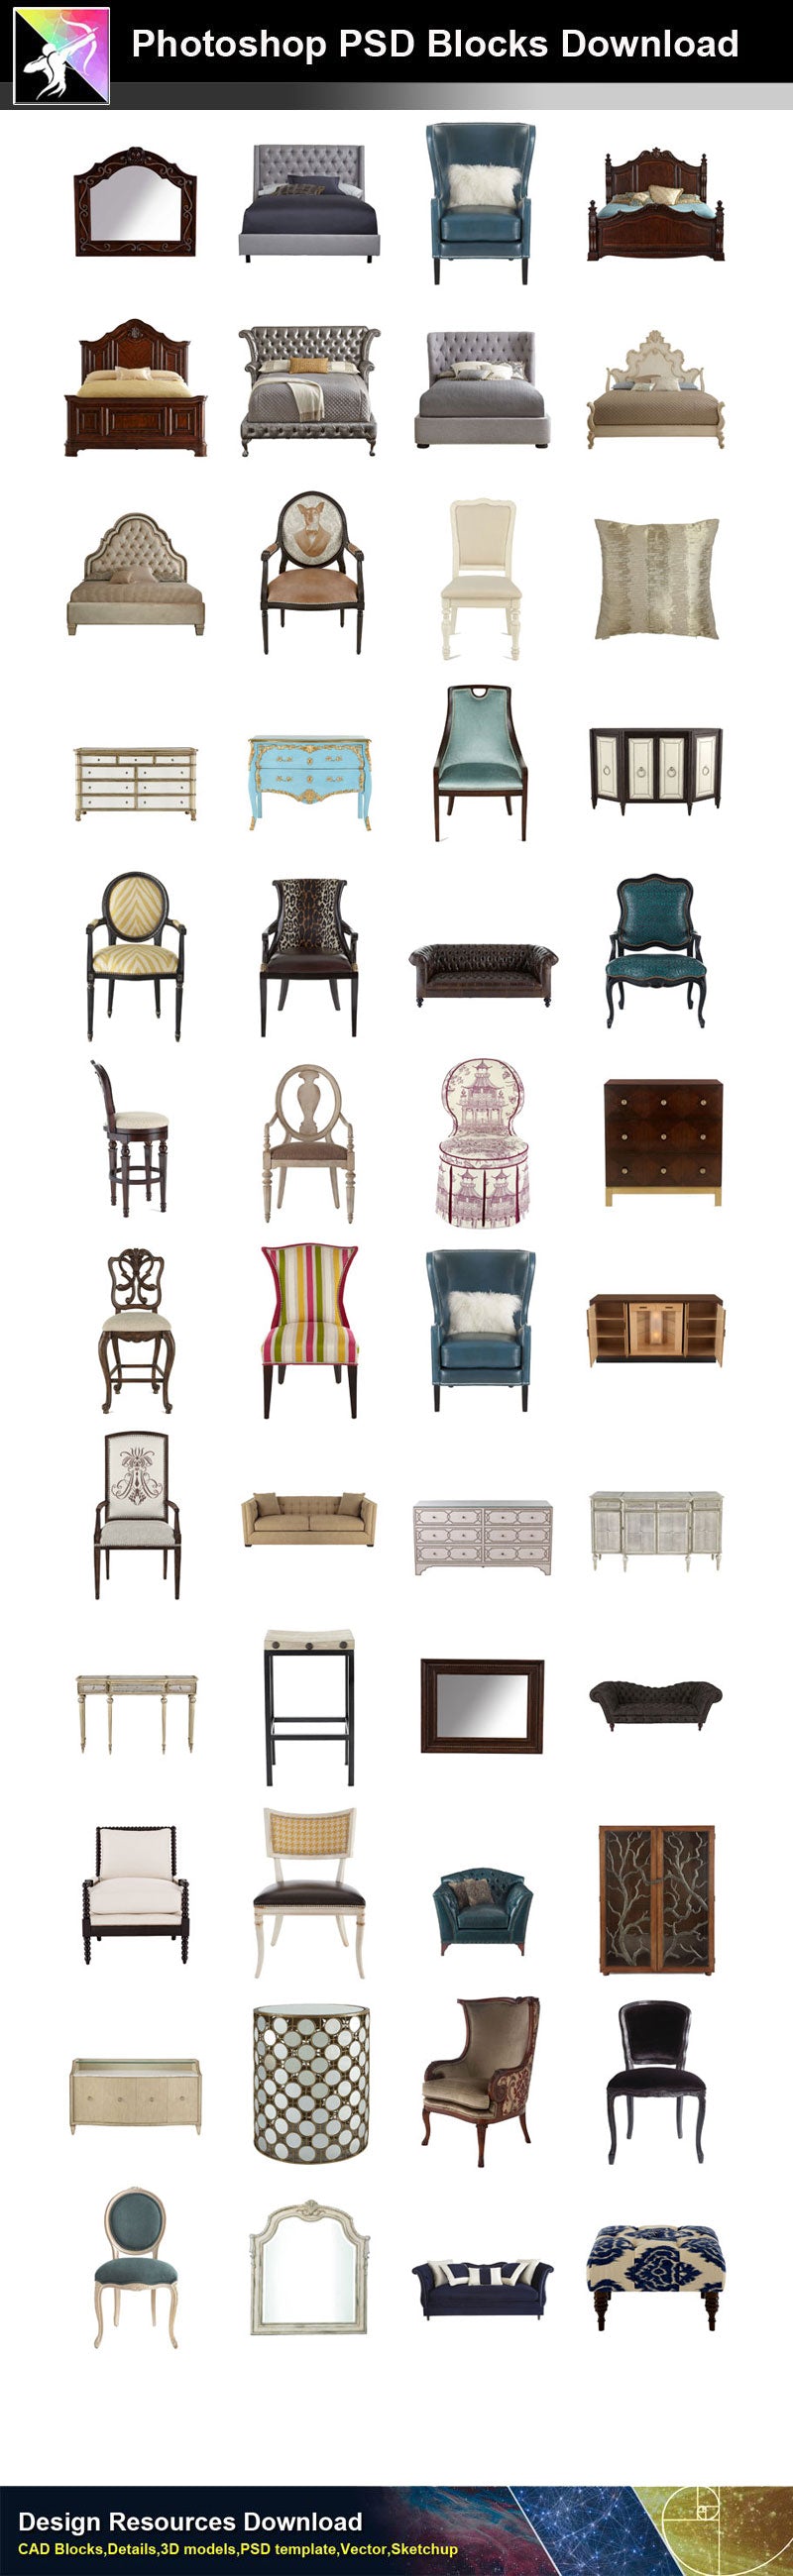 【Photoshop PSD Blocks】Luxury Furniture PSD Blocks 2